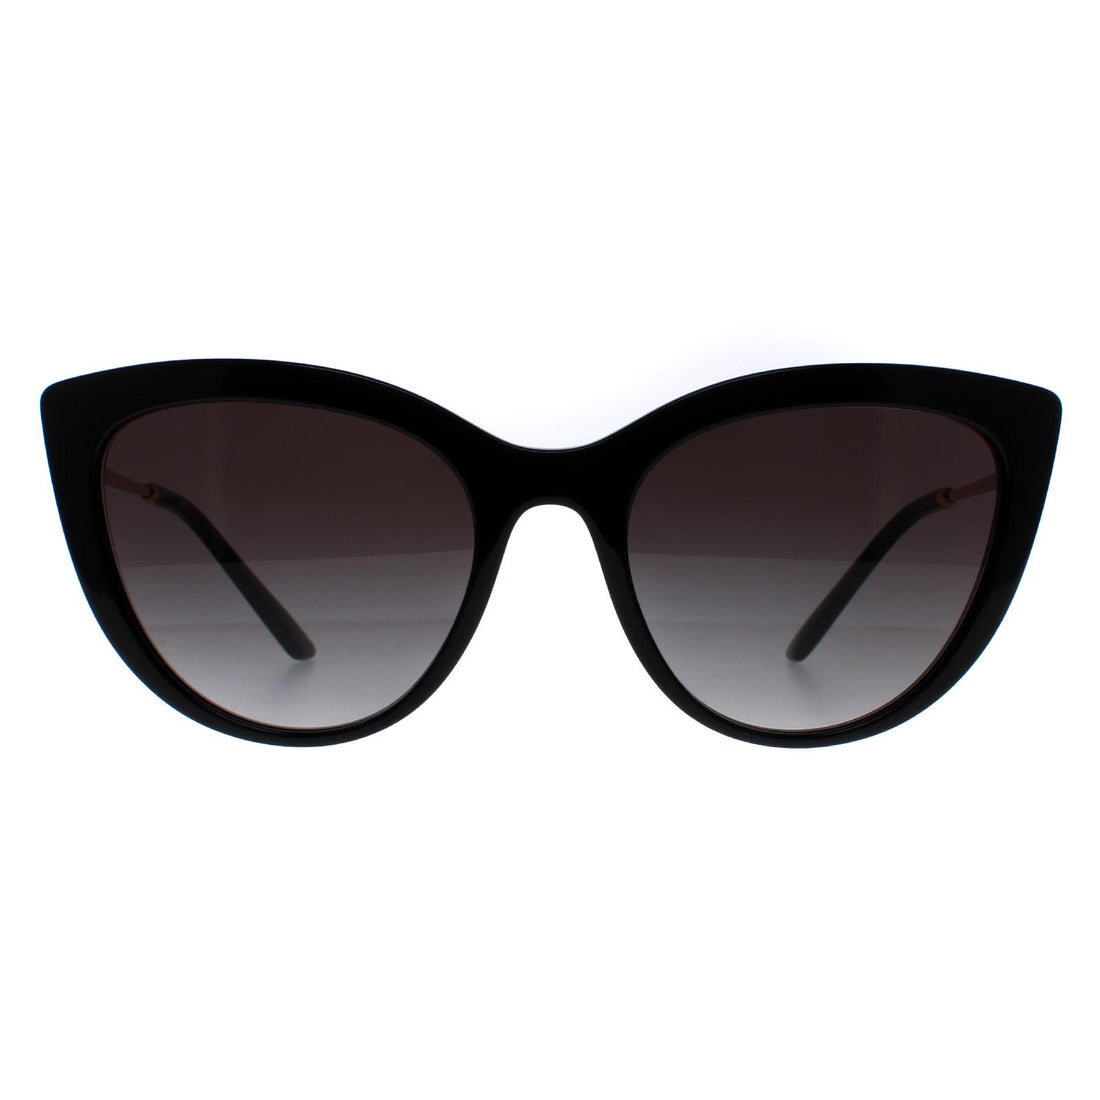 Dolce & Gabbana DG4408 Sunglasses Black / Grey Gradient